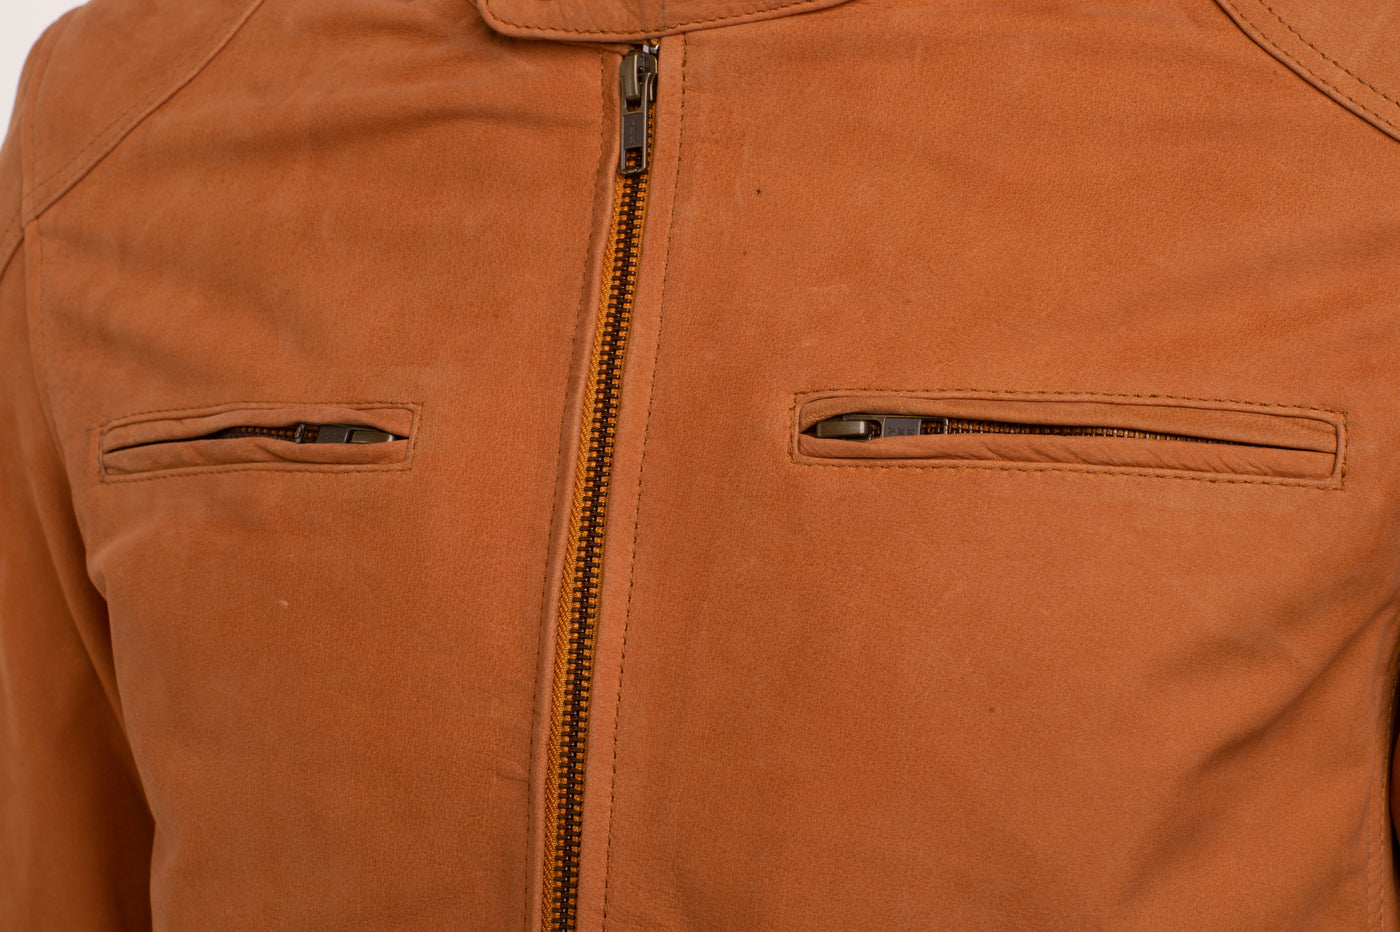 Steve's plain moto jacket in nubuck leather